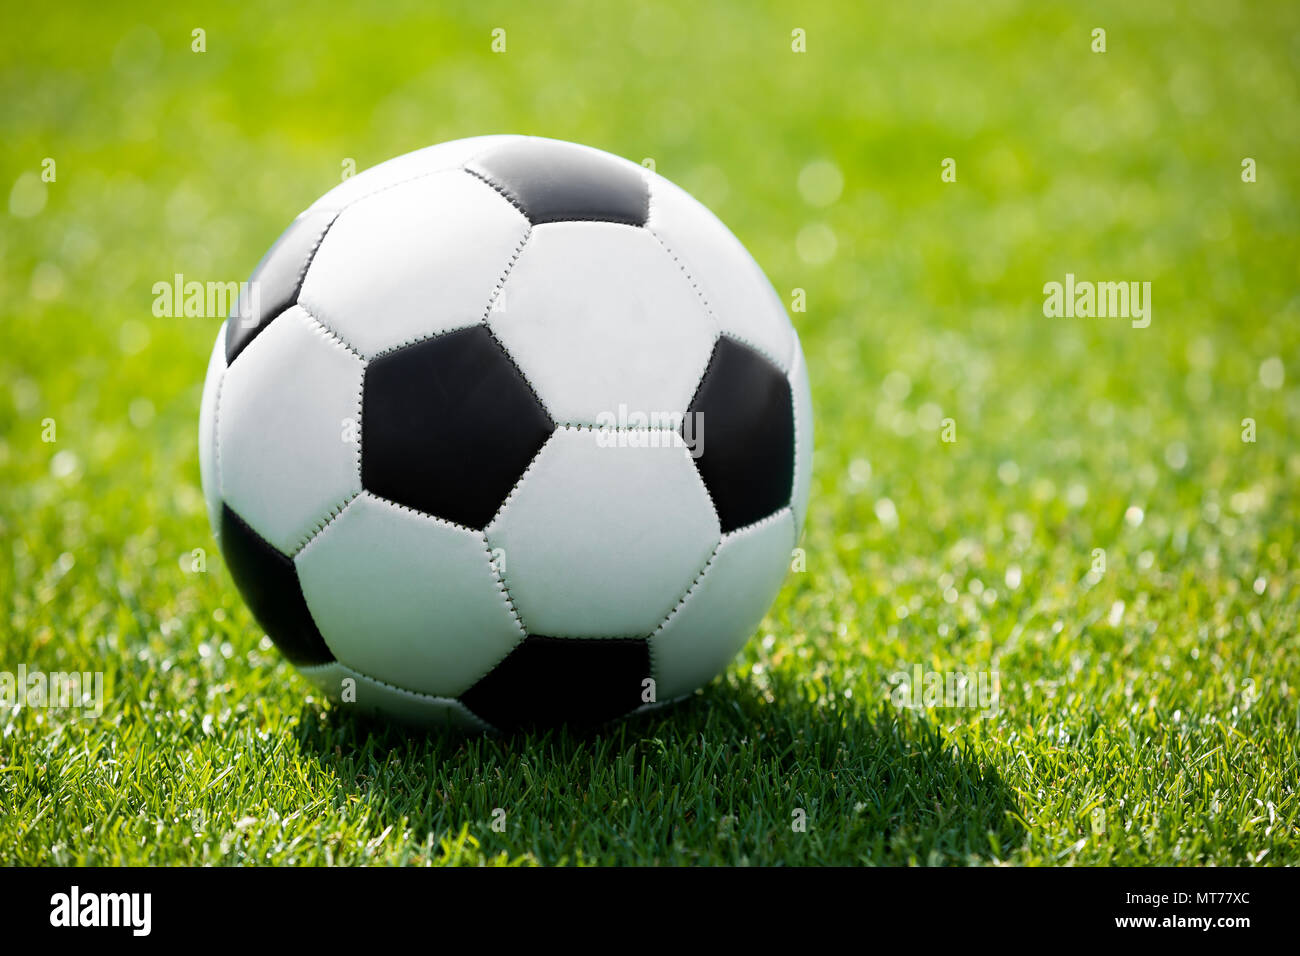 Pelota de futbol en pasto fotografías e imágenes de alta resolución - Alamy